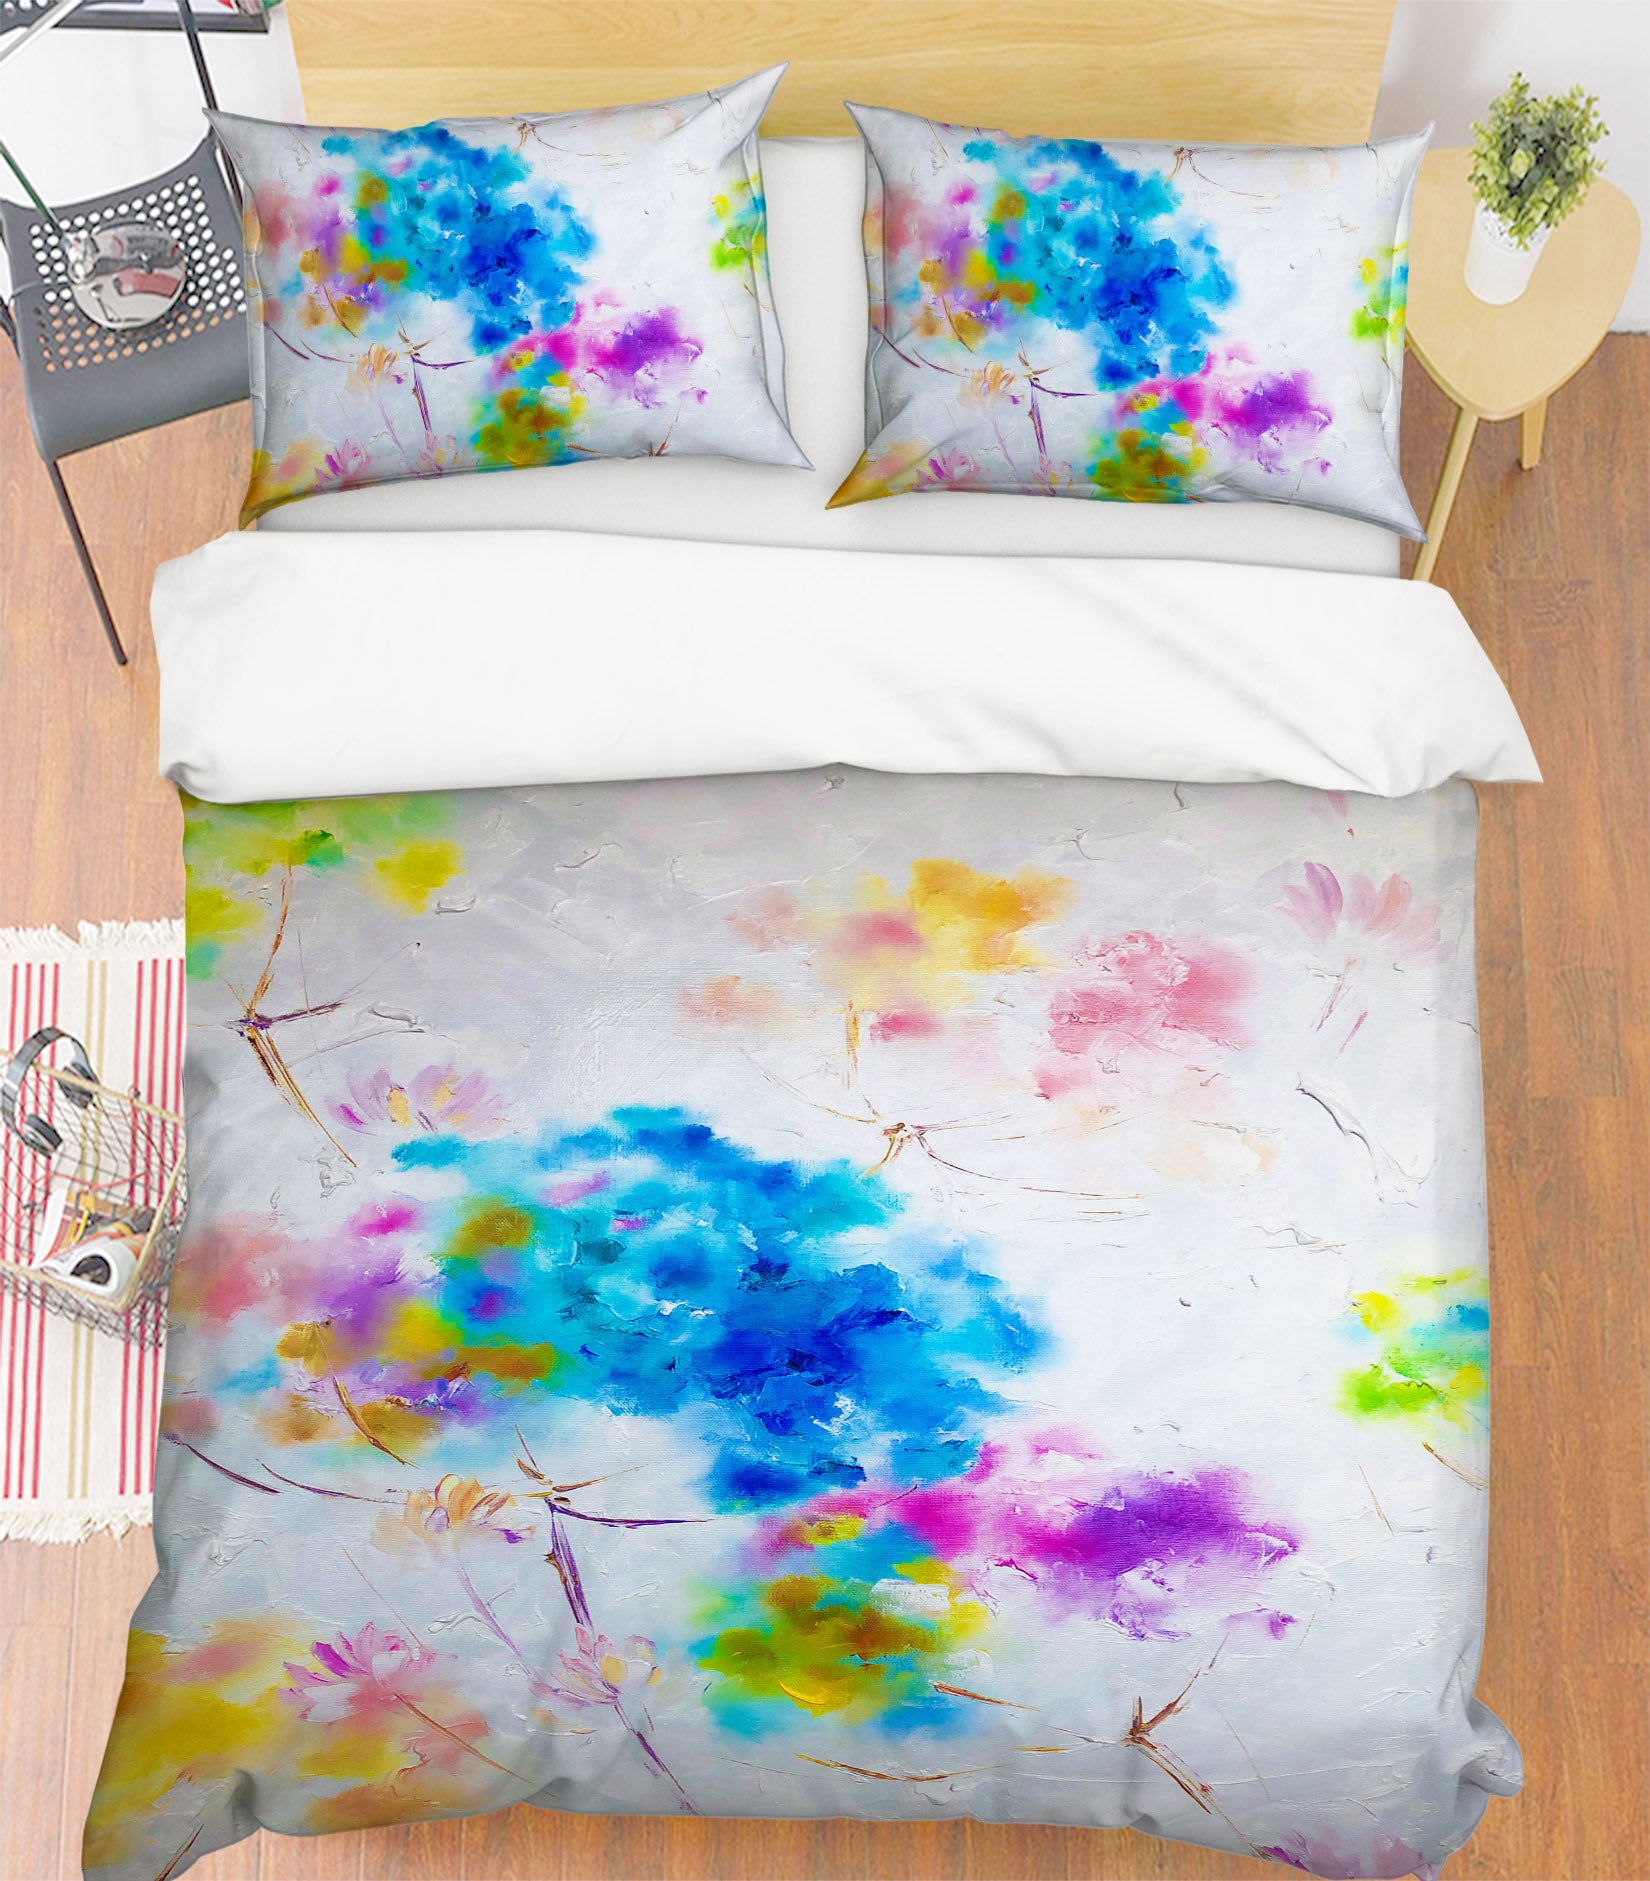 3D Watercolor Flowers 600 Skromova Marina Bedding Bed Pillowcases Quilt